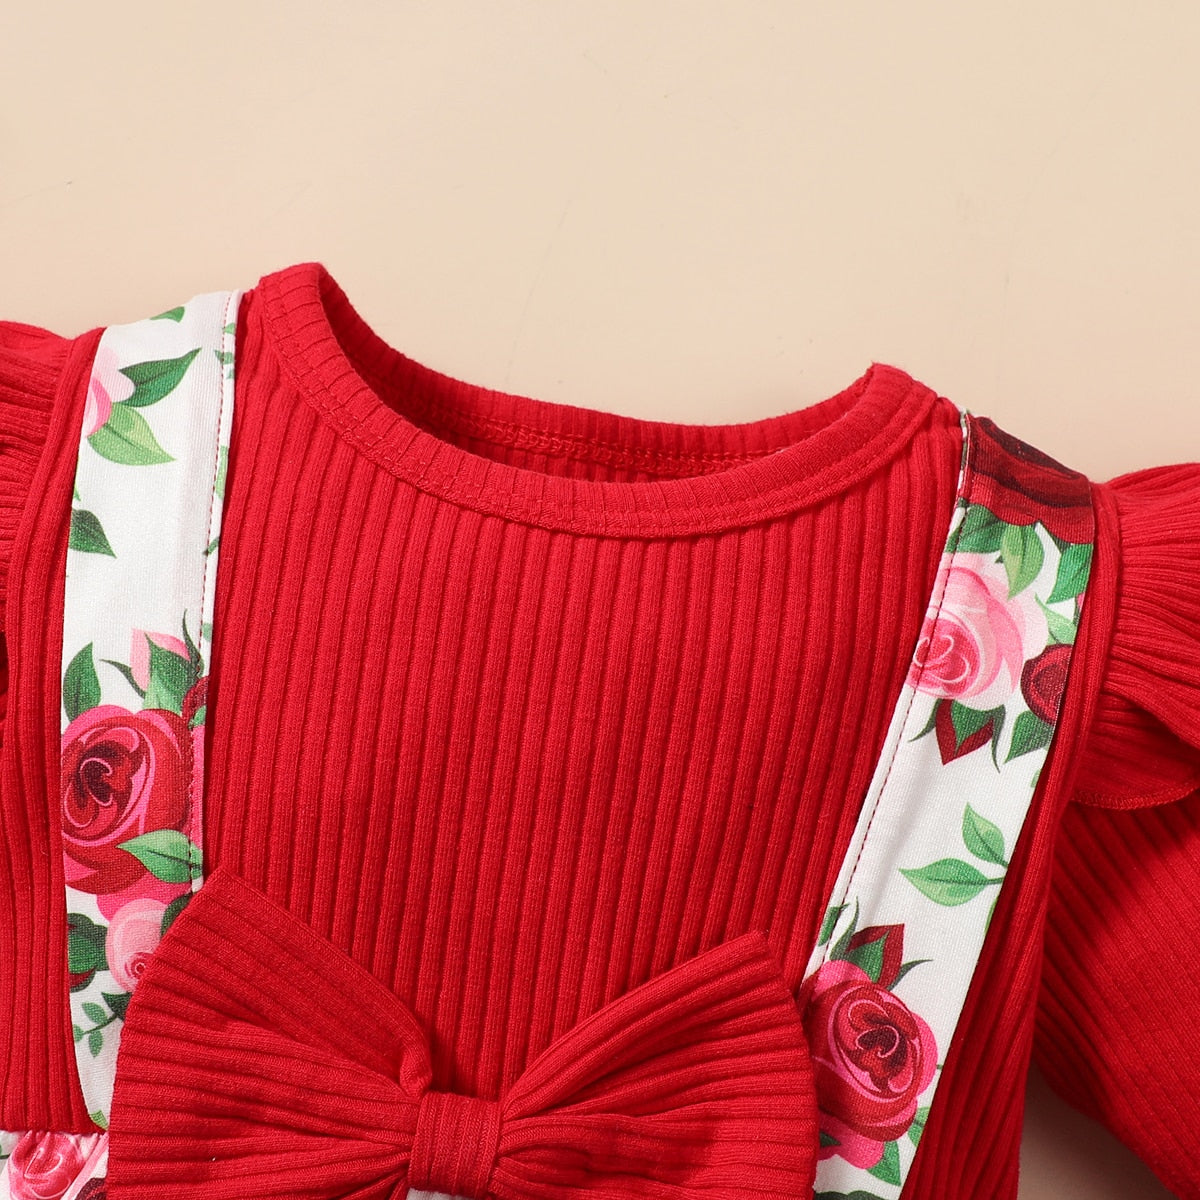 Newborn Rompers Baby Girl Spring Autumn Infant Long-sleeve Floral Printing Jumpsuit - BTGR8434